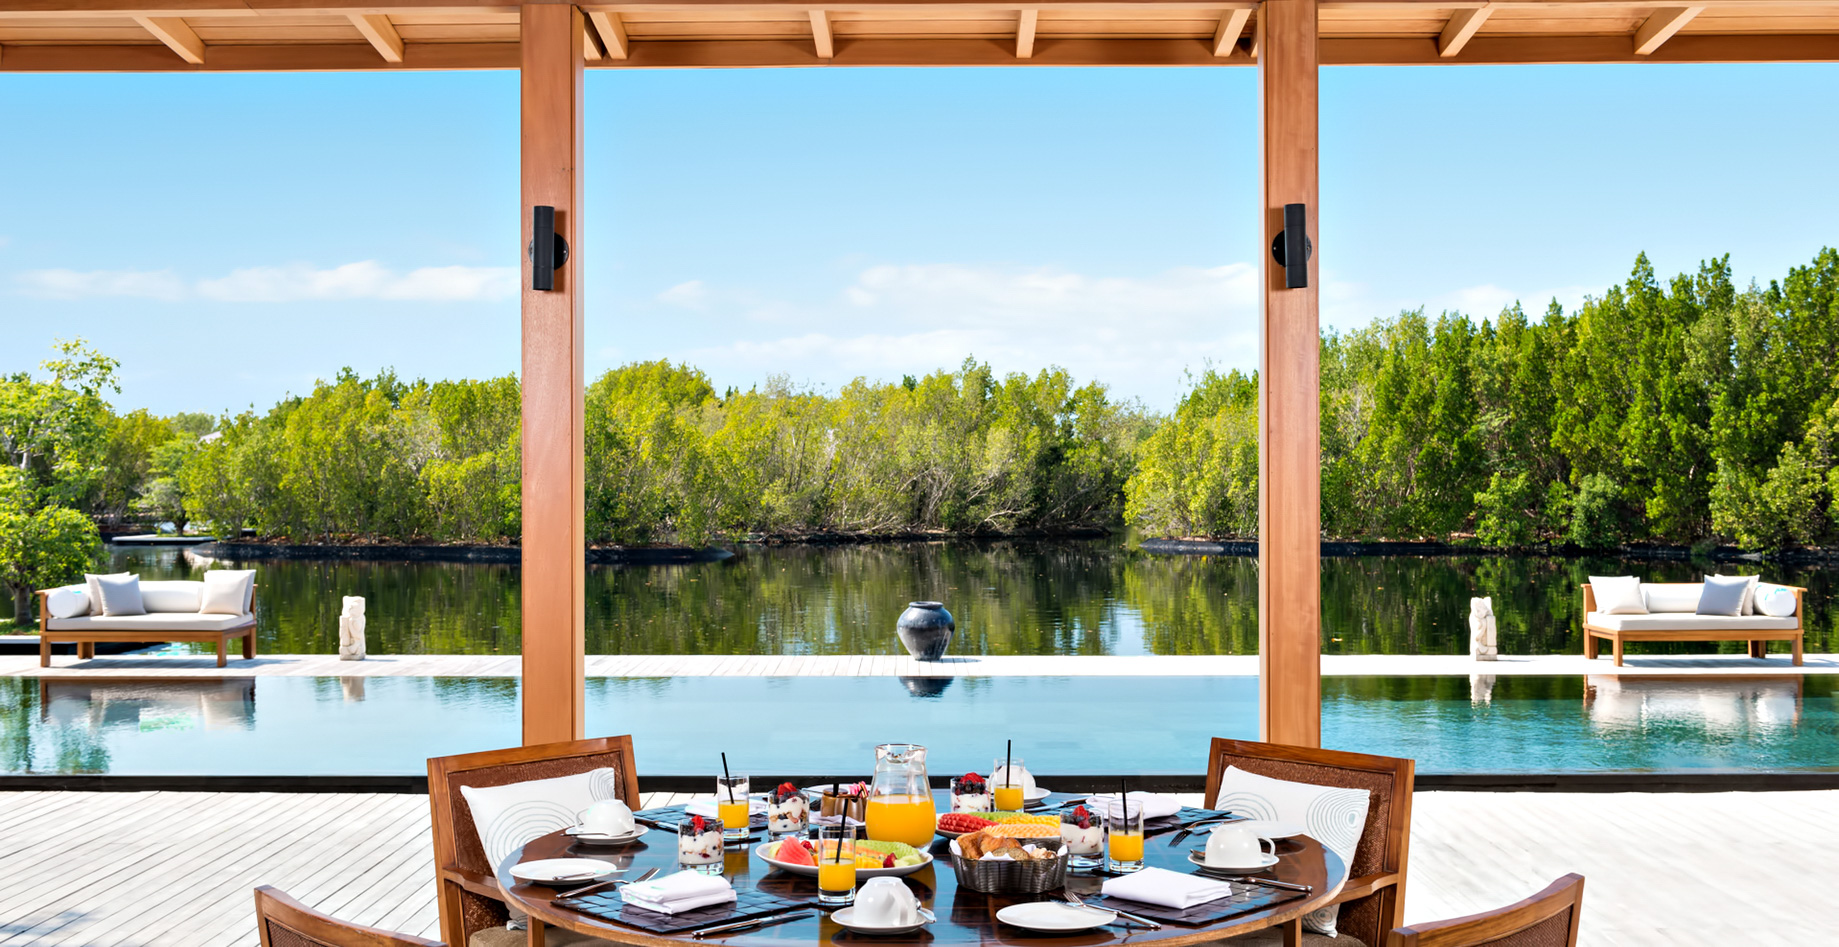 Amanyara Resort - Providenciales, Turks and Caicos Islands - Villa Dining Area Pool Deck Water View